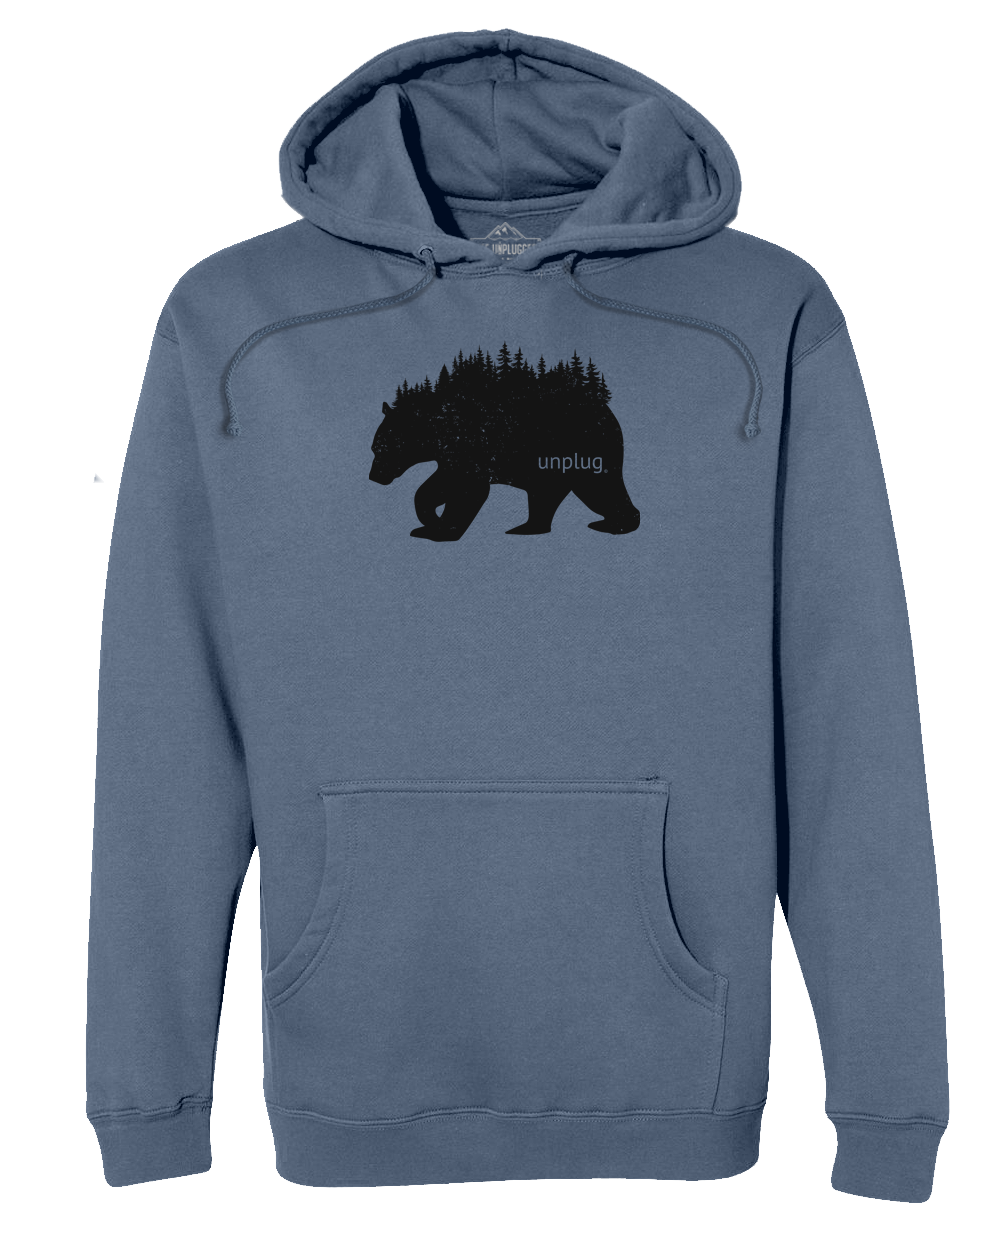 BEAR IN THE TREES Premium Heavyweight Hooded Sweatshirt